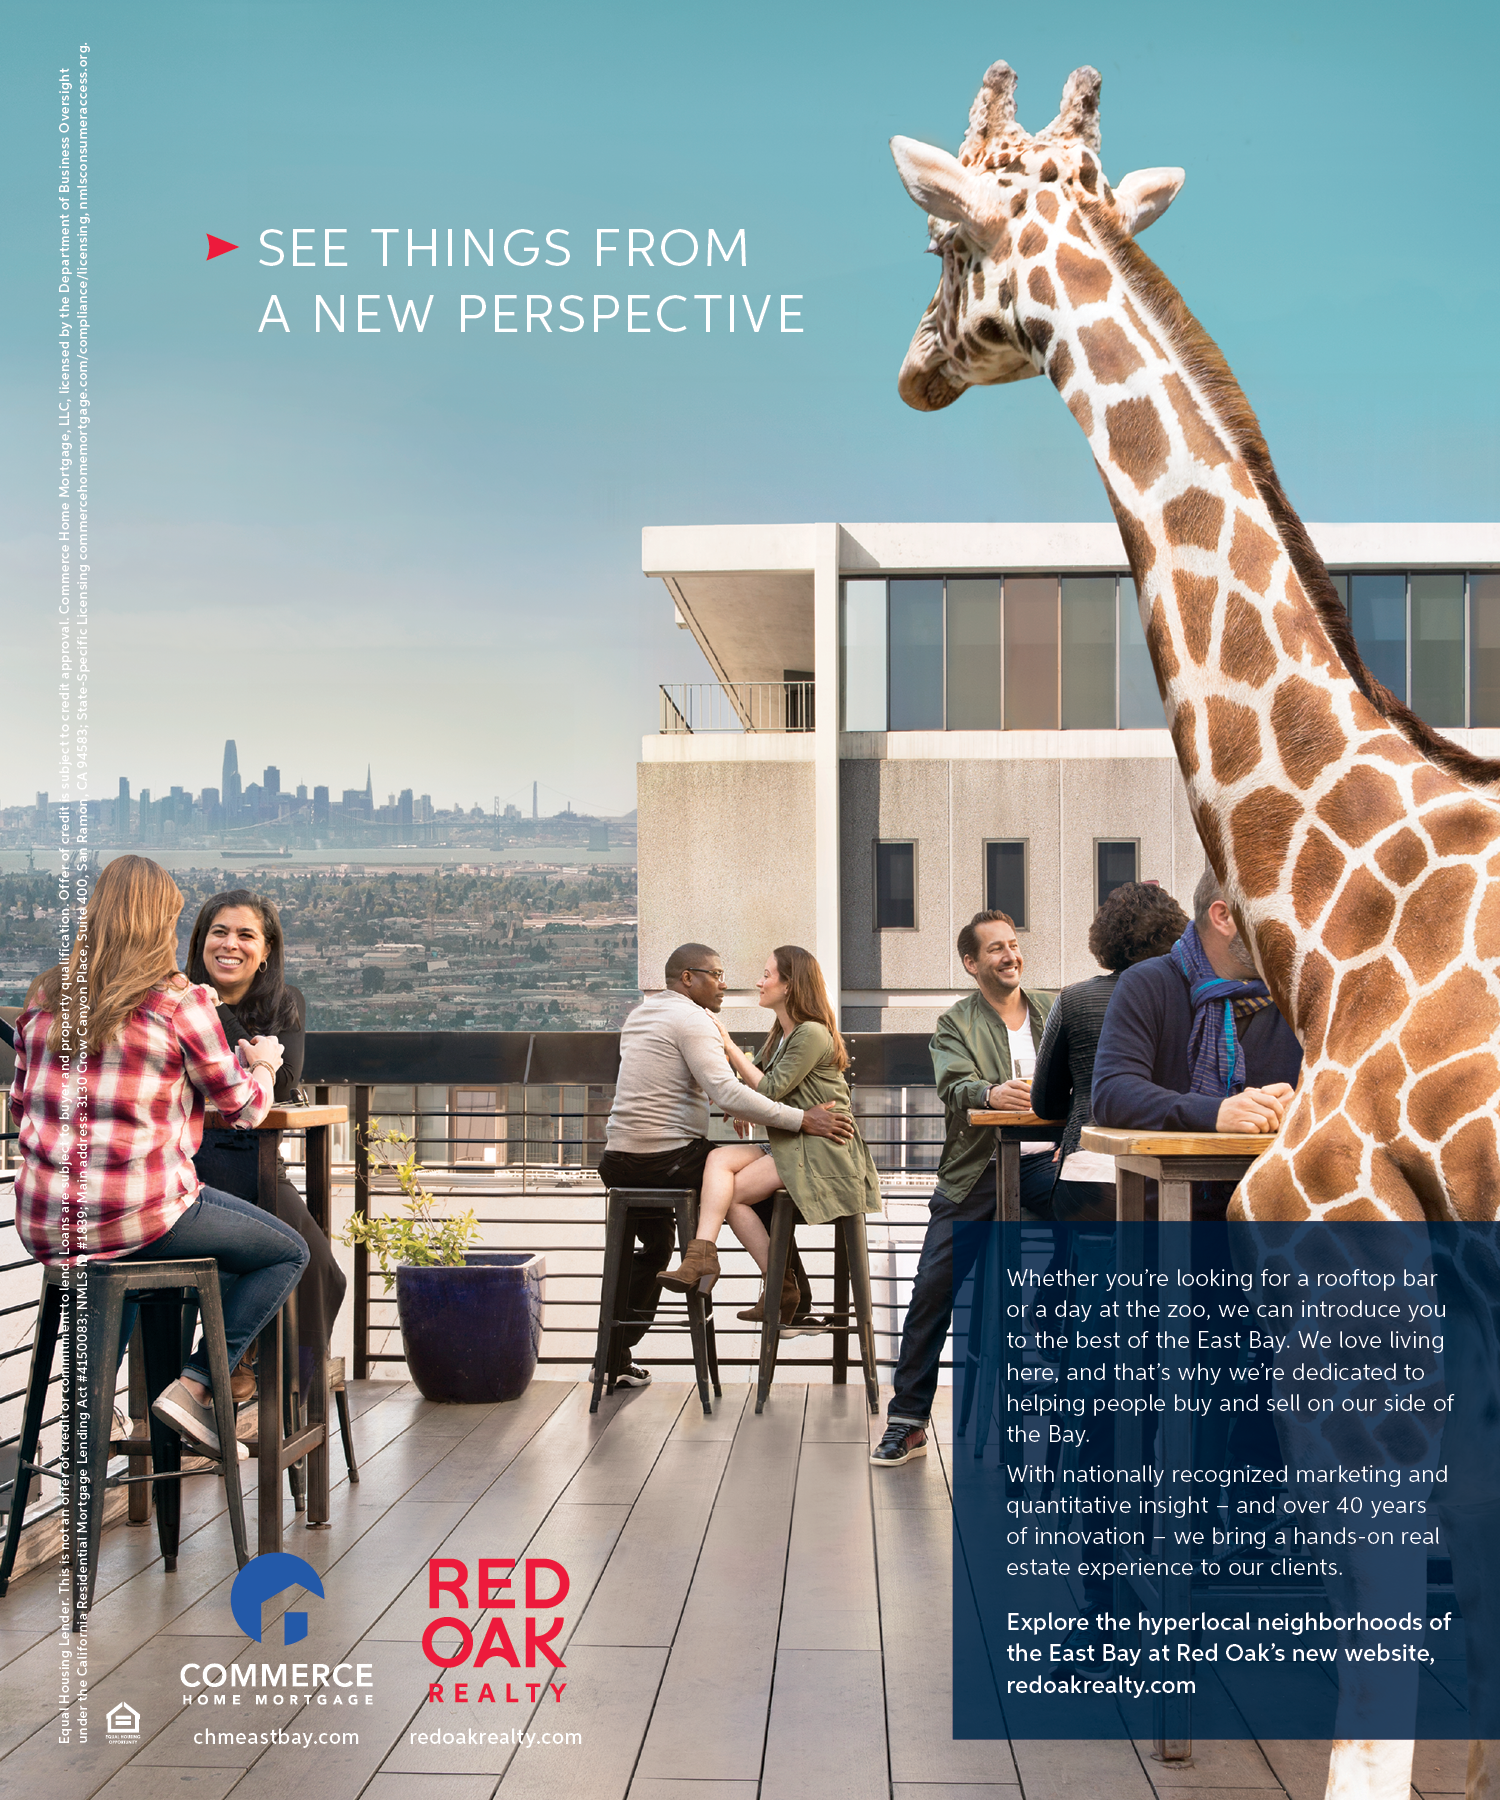 San Francisco Magazine | Jun 2019 | Red Oak Realty 2019 ad campaign